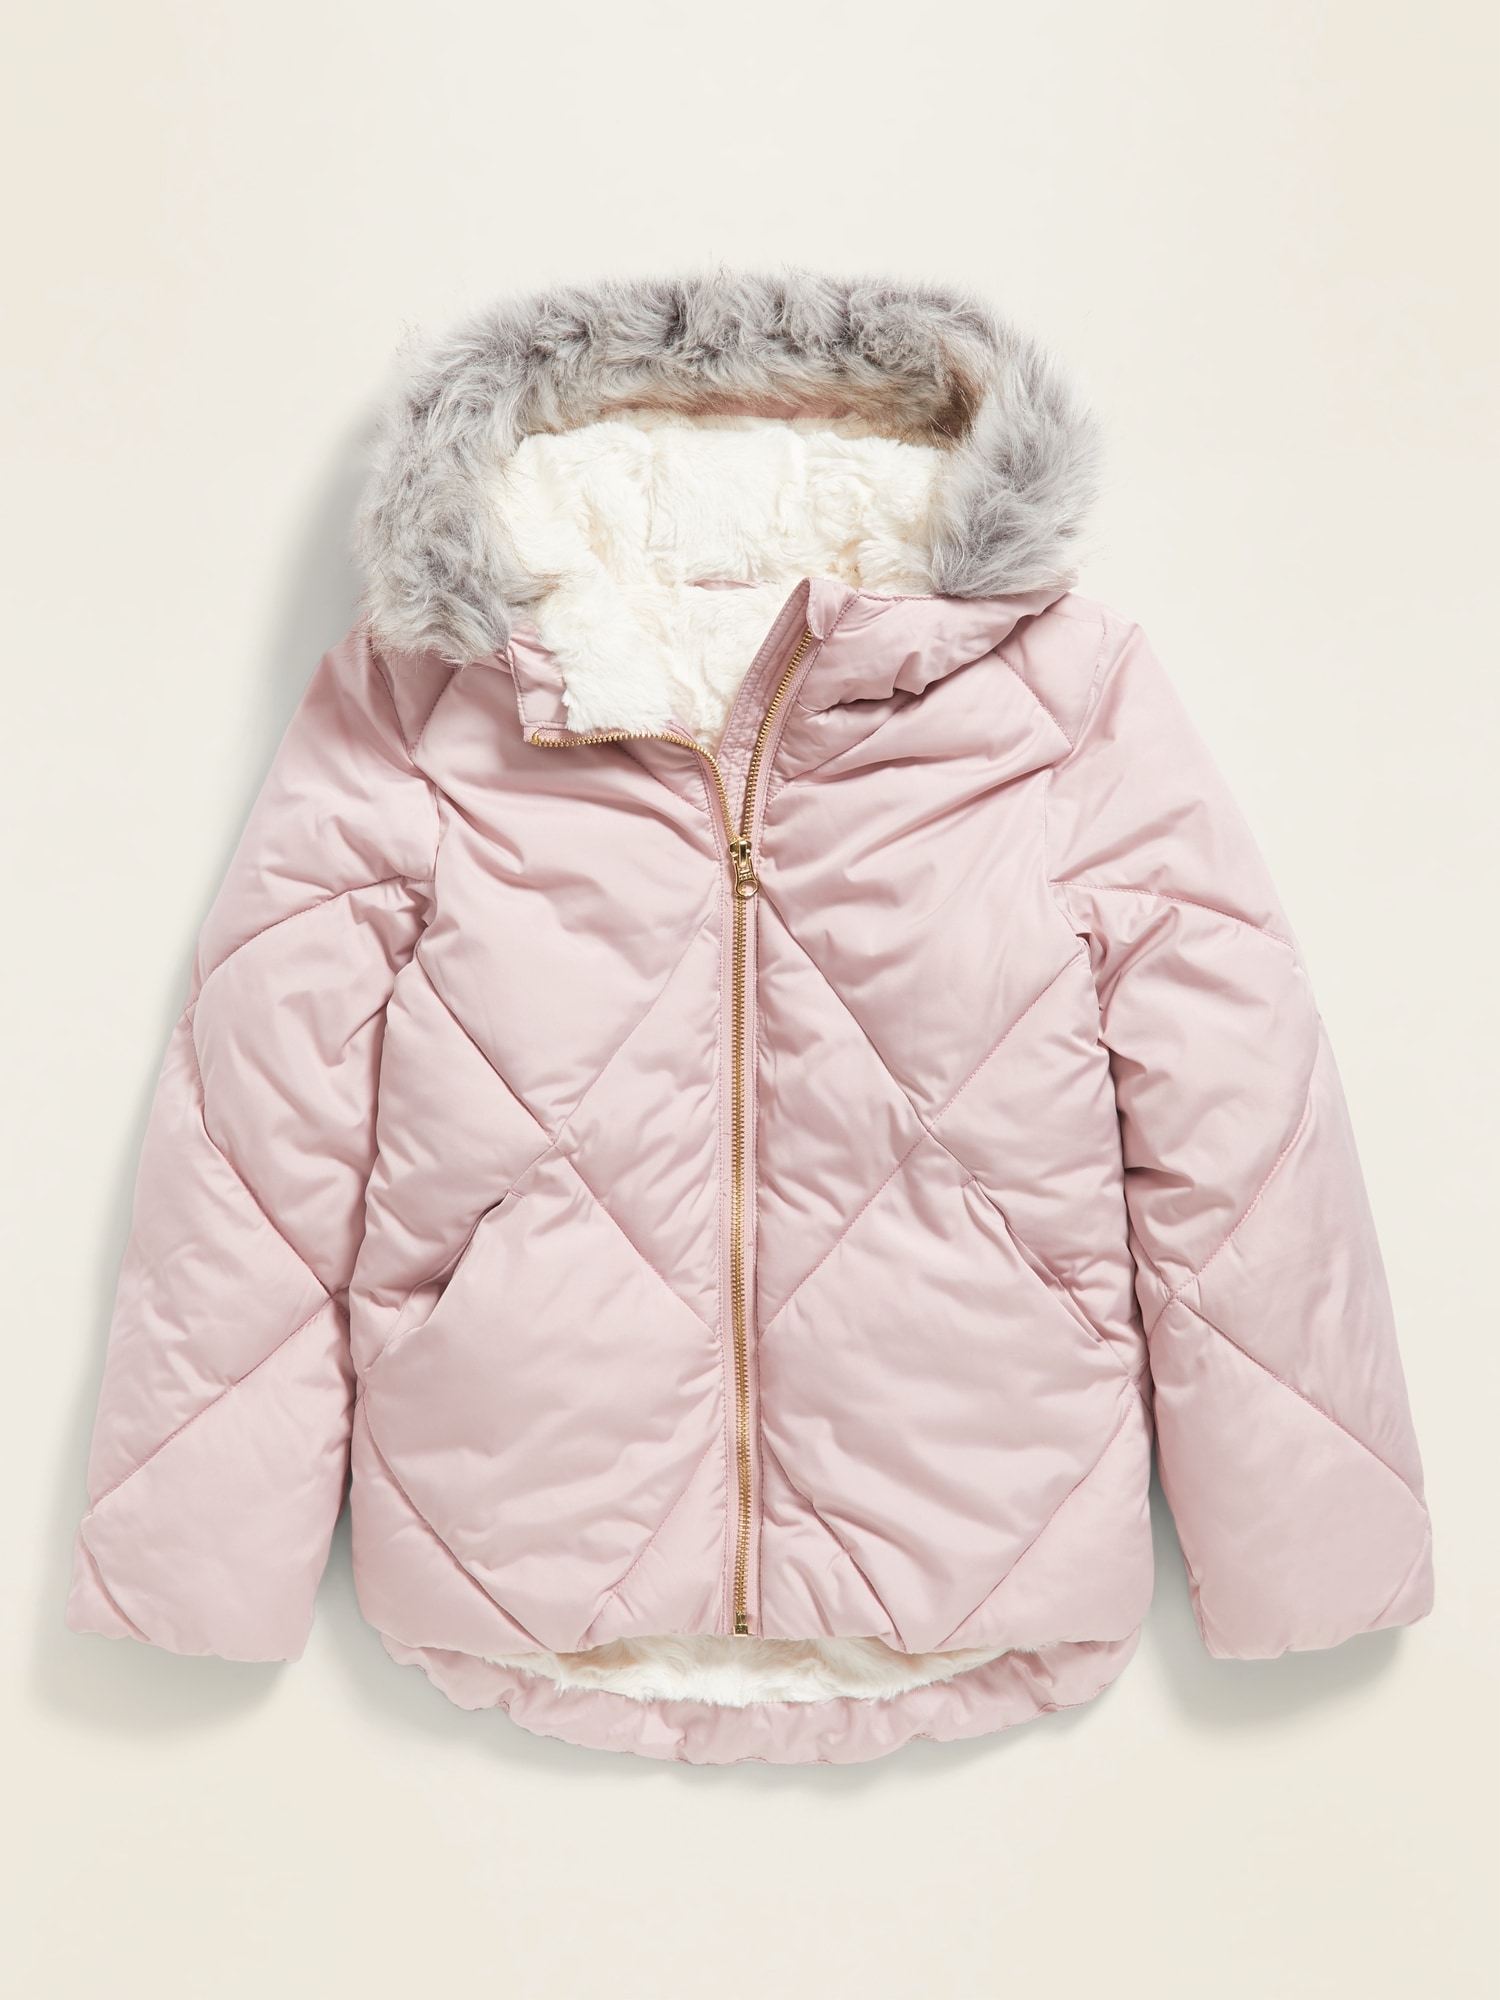 girls puffer jacket with fur hood